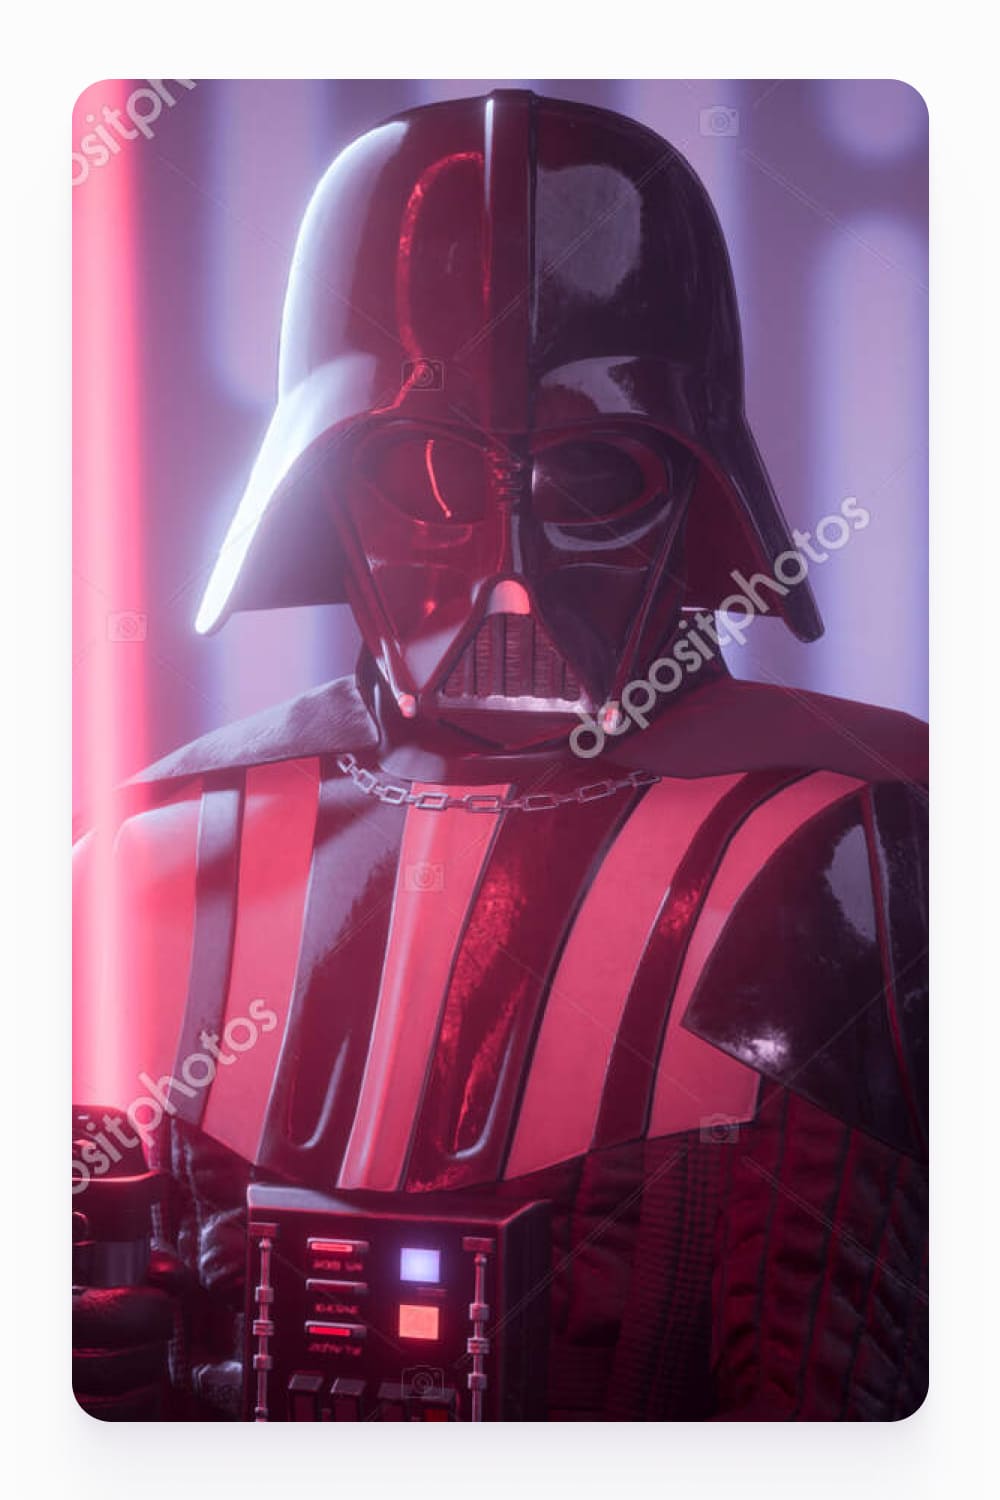 3D render with Darth Vader with red light saber.